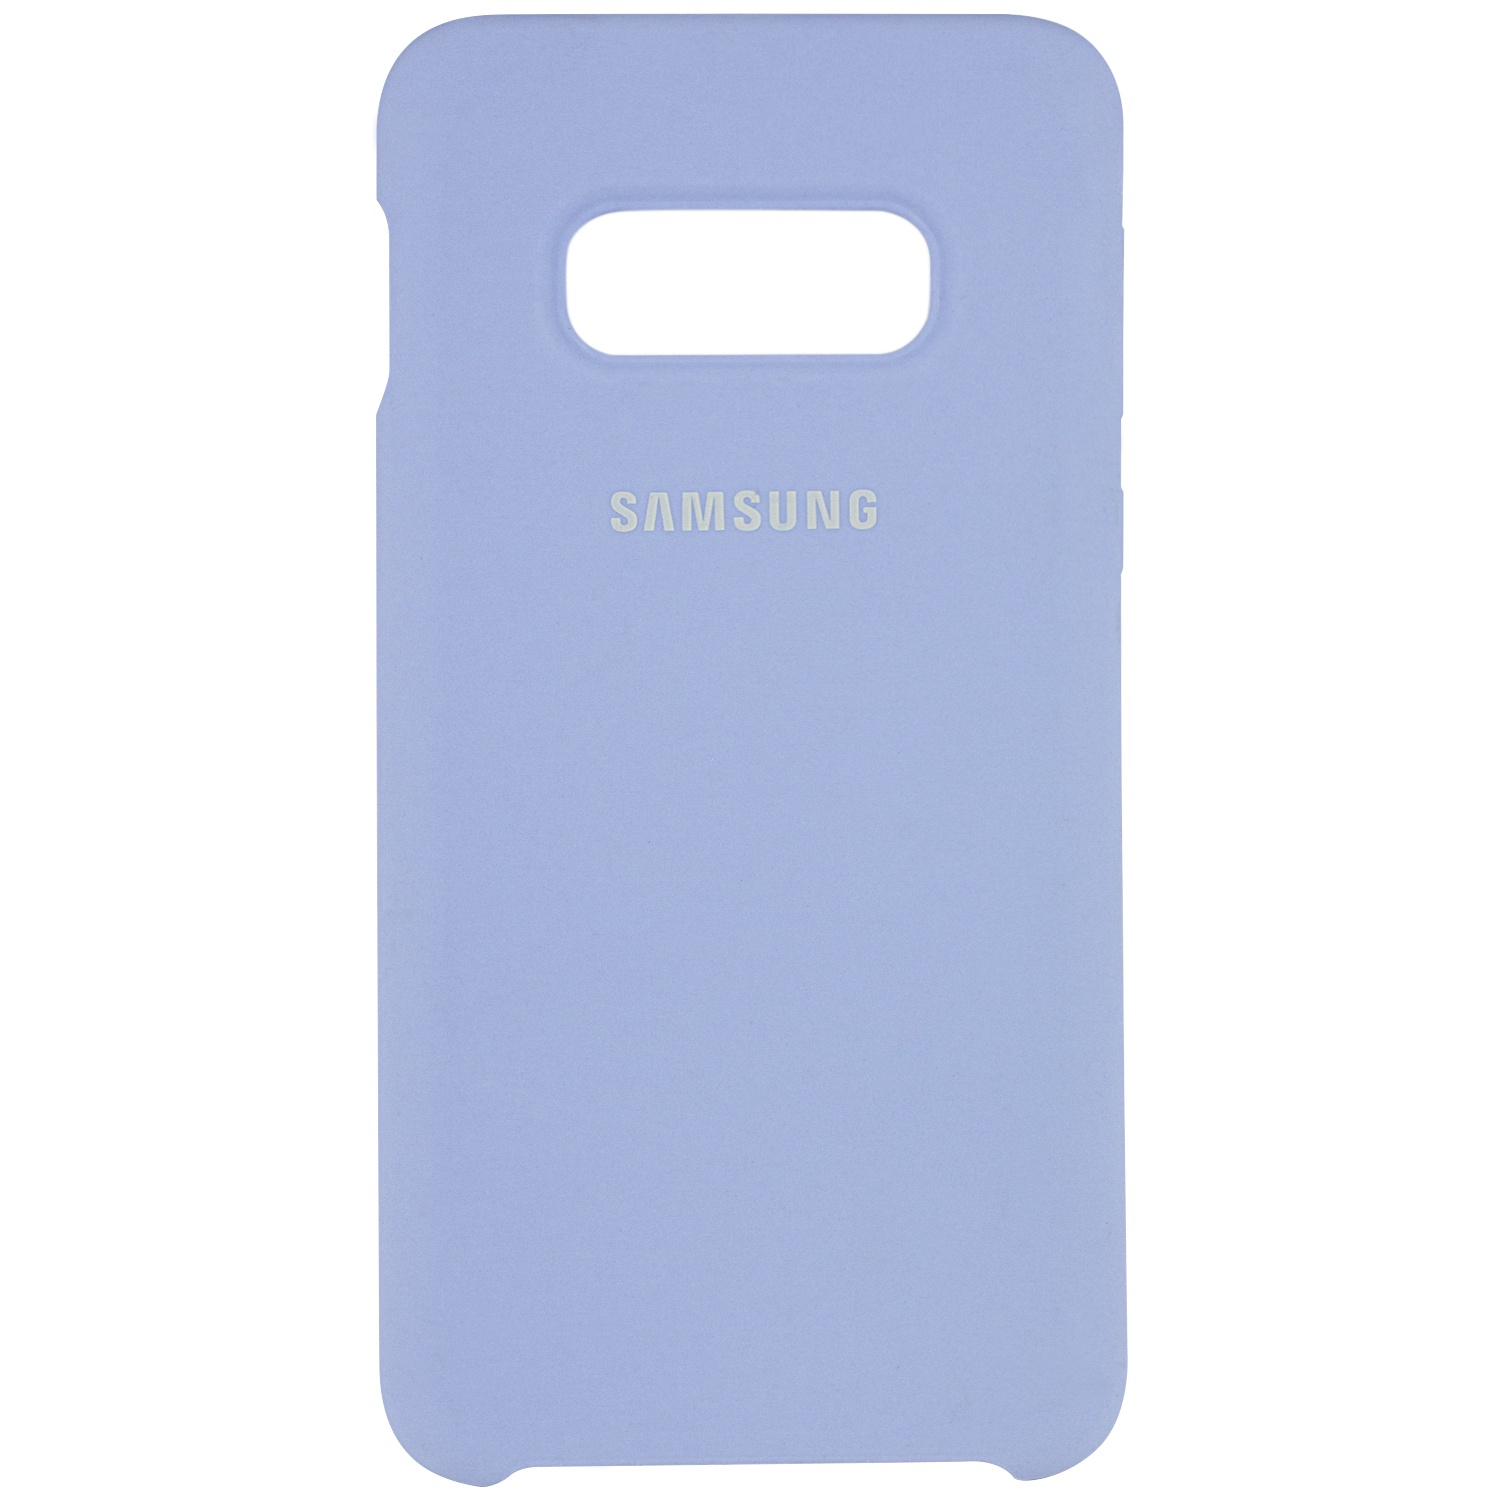 Оригинальные чехлы s22. Samsung Galaxy s10 Silicone Cover. Чехол Samsung Silicone Cover s10. Samsung Silicone Cover s10 Blue. S10e Samsung чехол Cover.